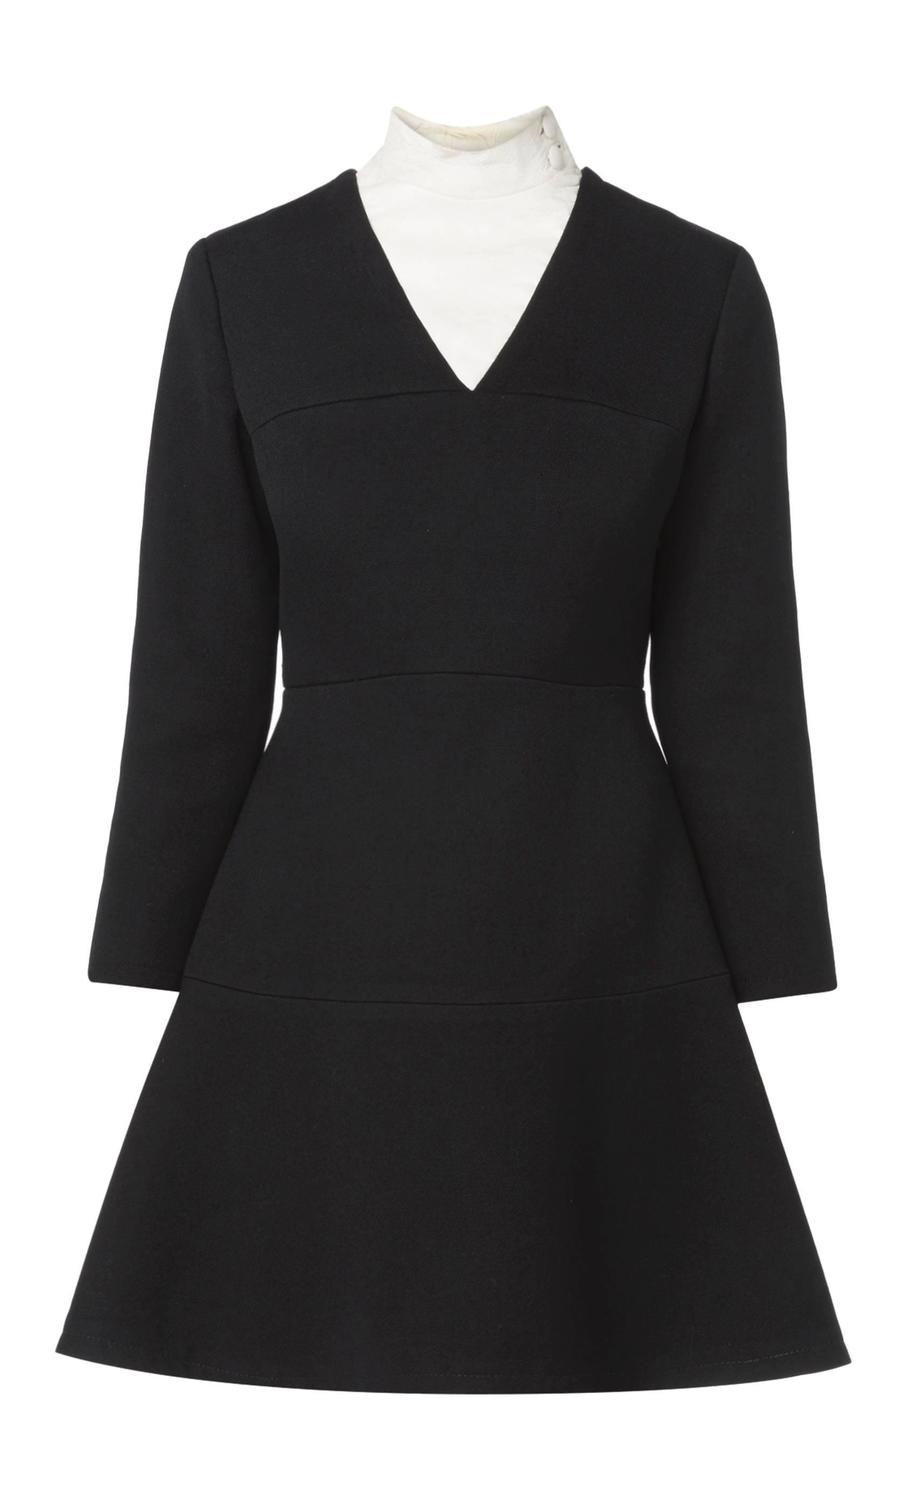 Pierre Cardin black dress, circa 1967 For Sale at 1stdibs